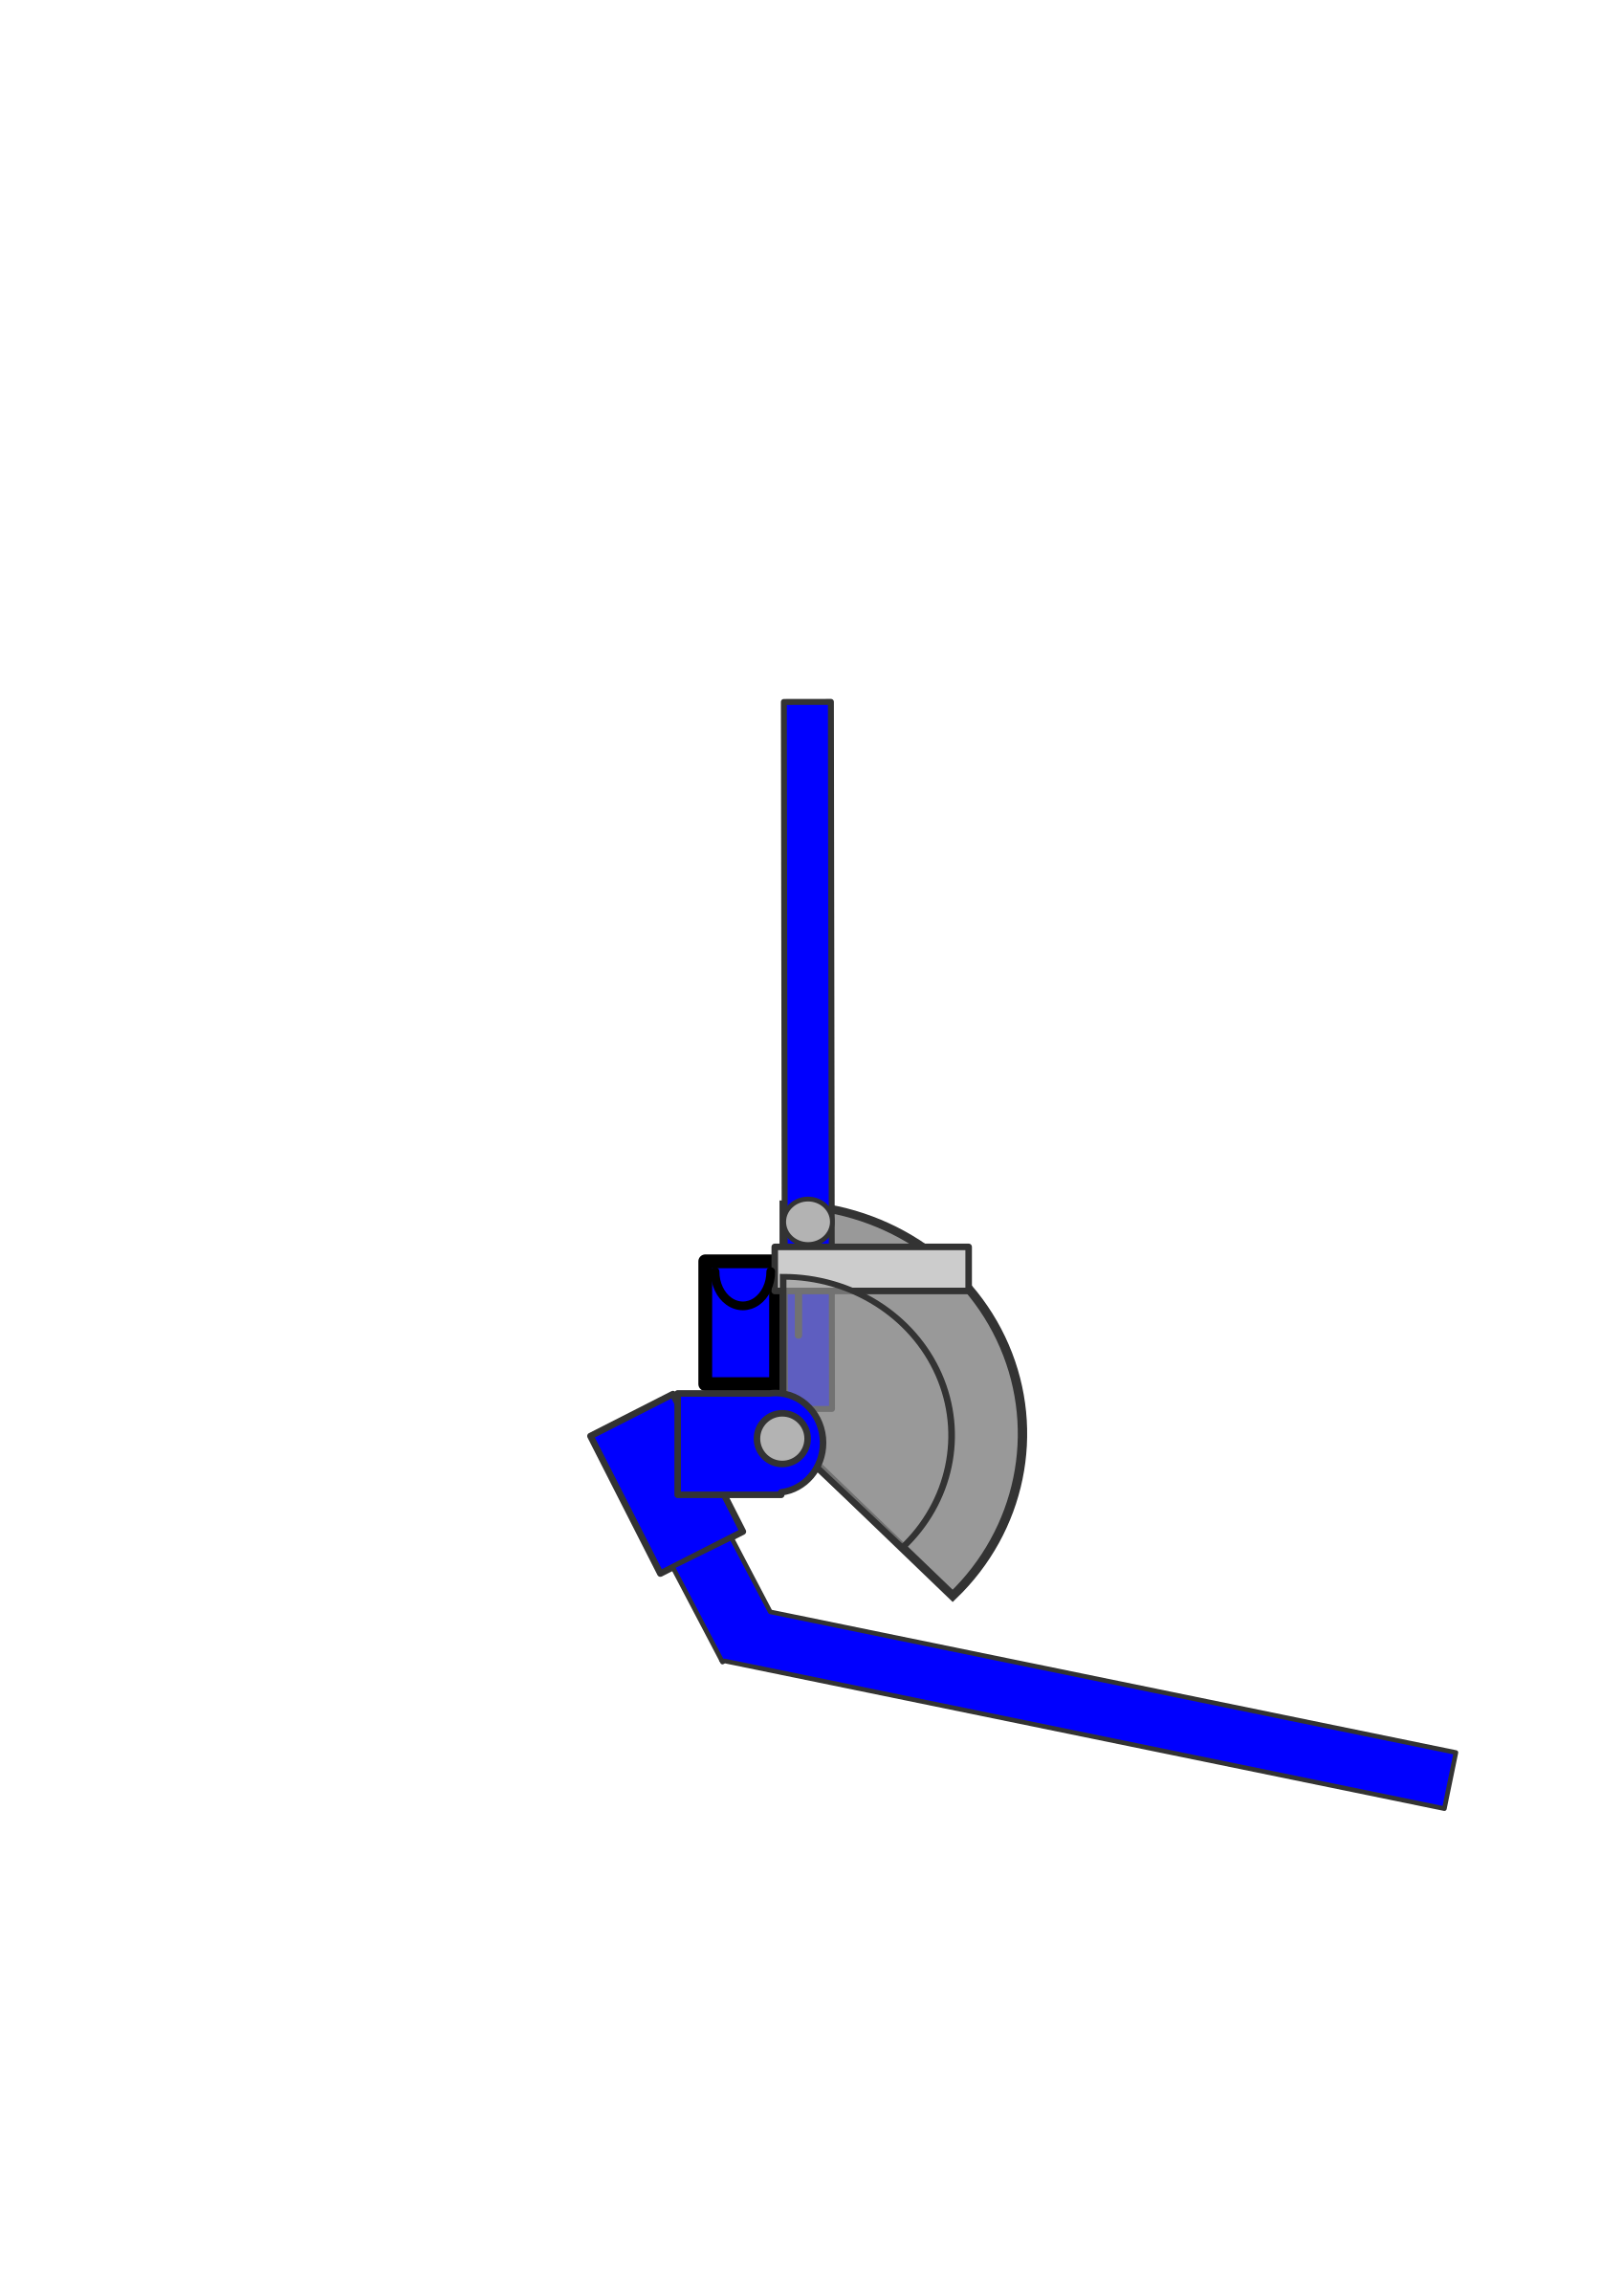 Plumbers Pipe Bending Machine Clip arts